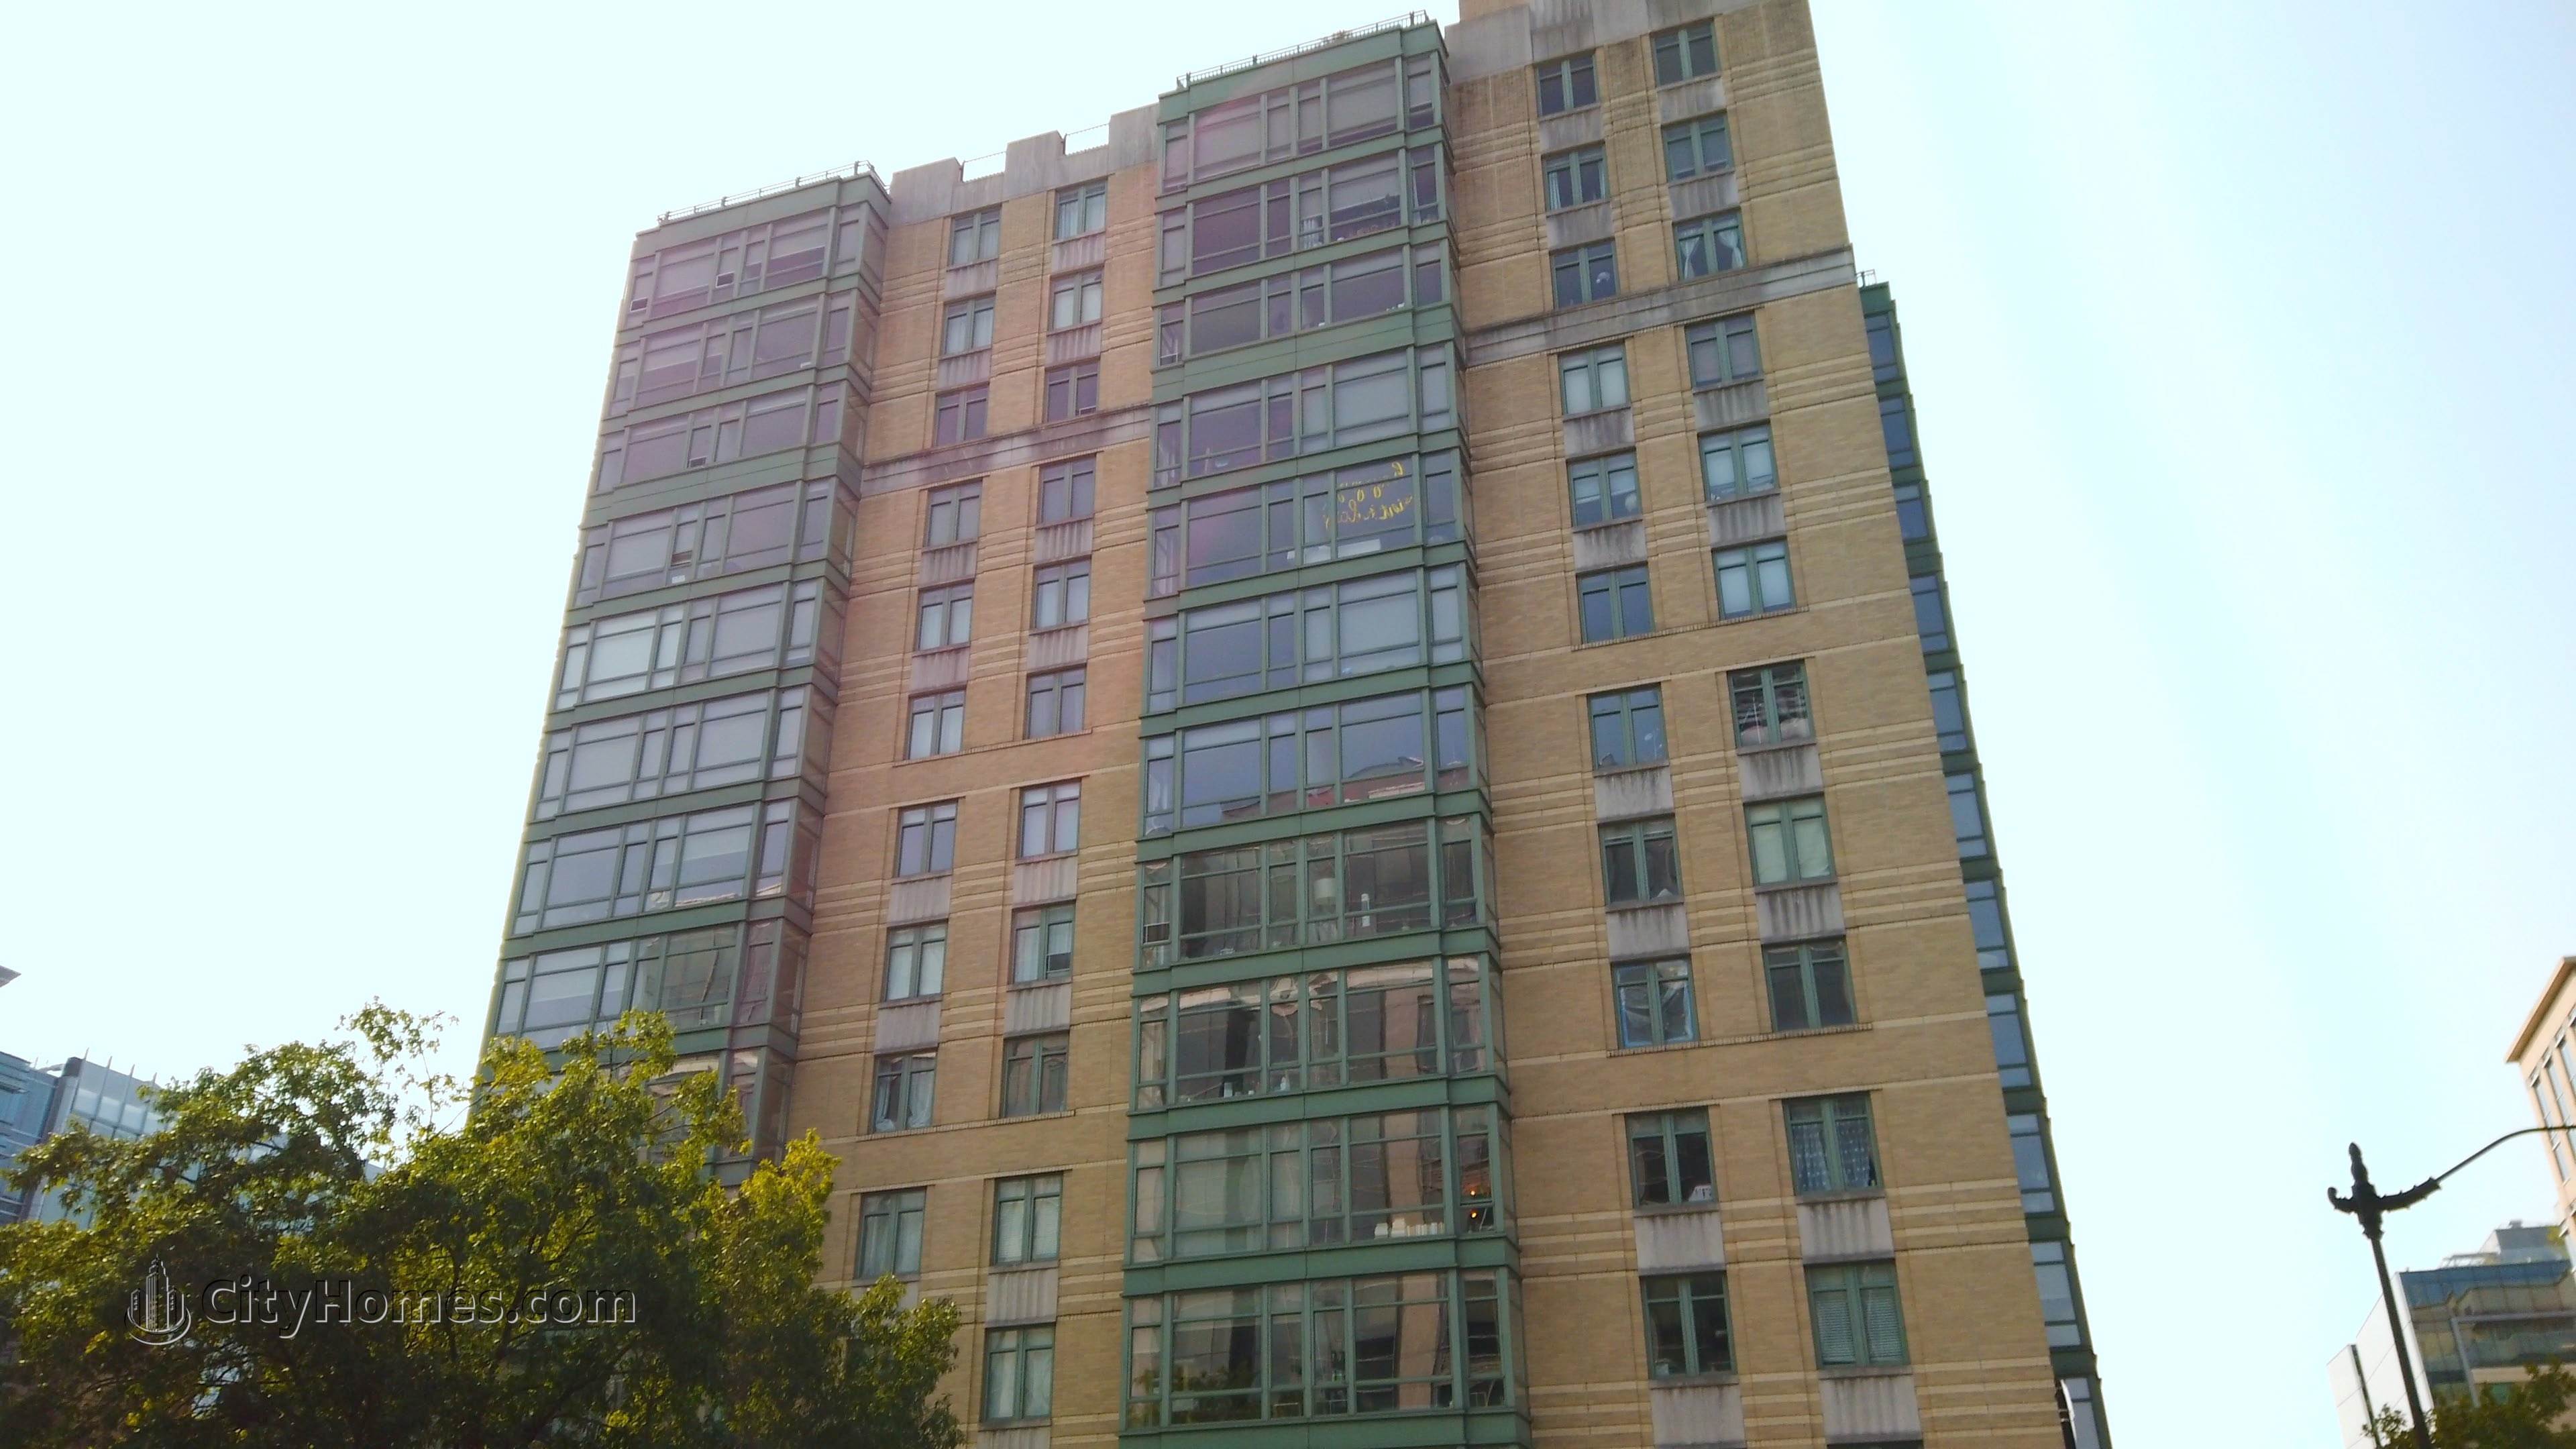 7. 1150 K Street edificio en 1150 K St NW, Downtown Penn Quarter, Washington, DC 20005